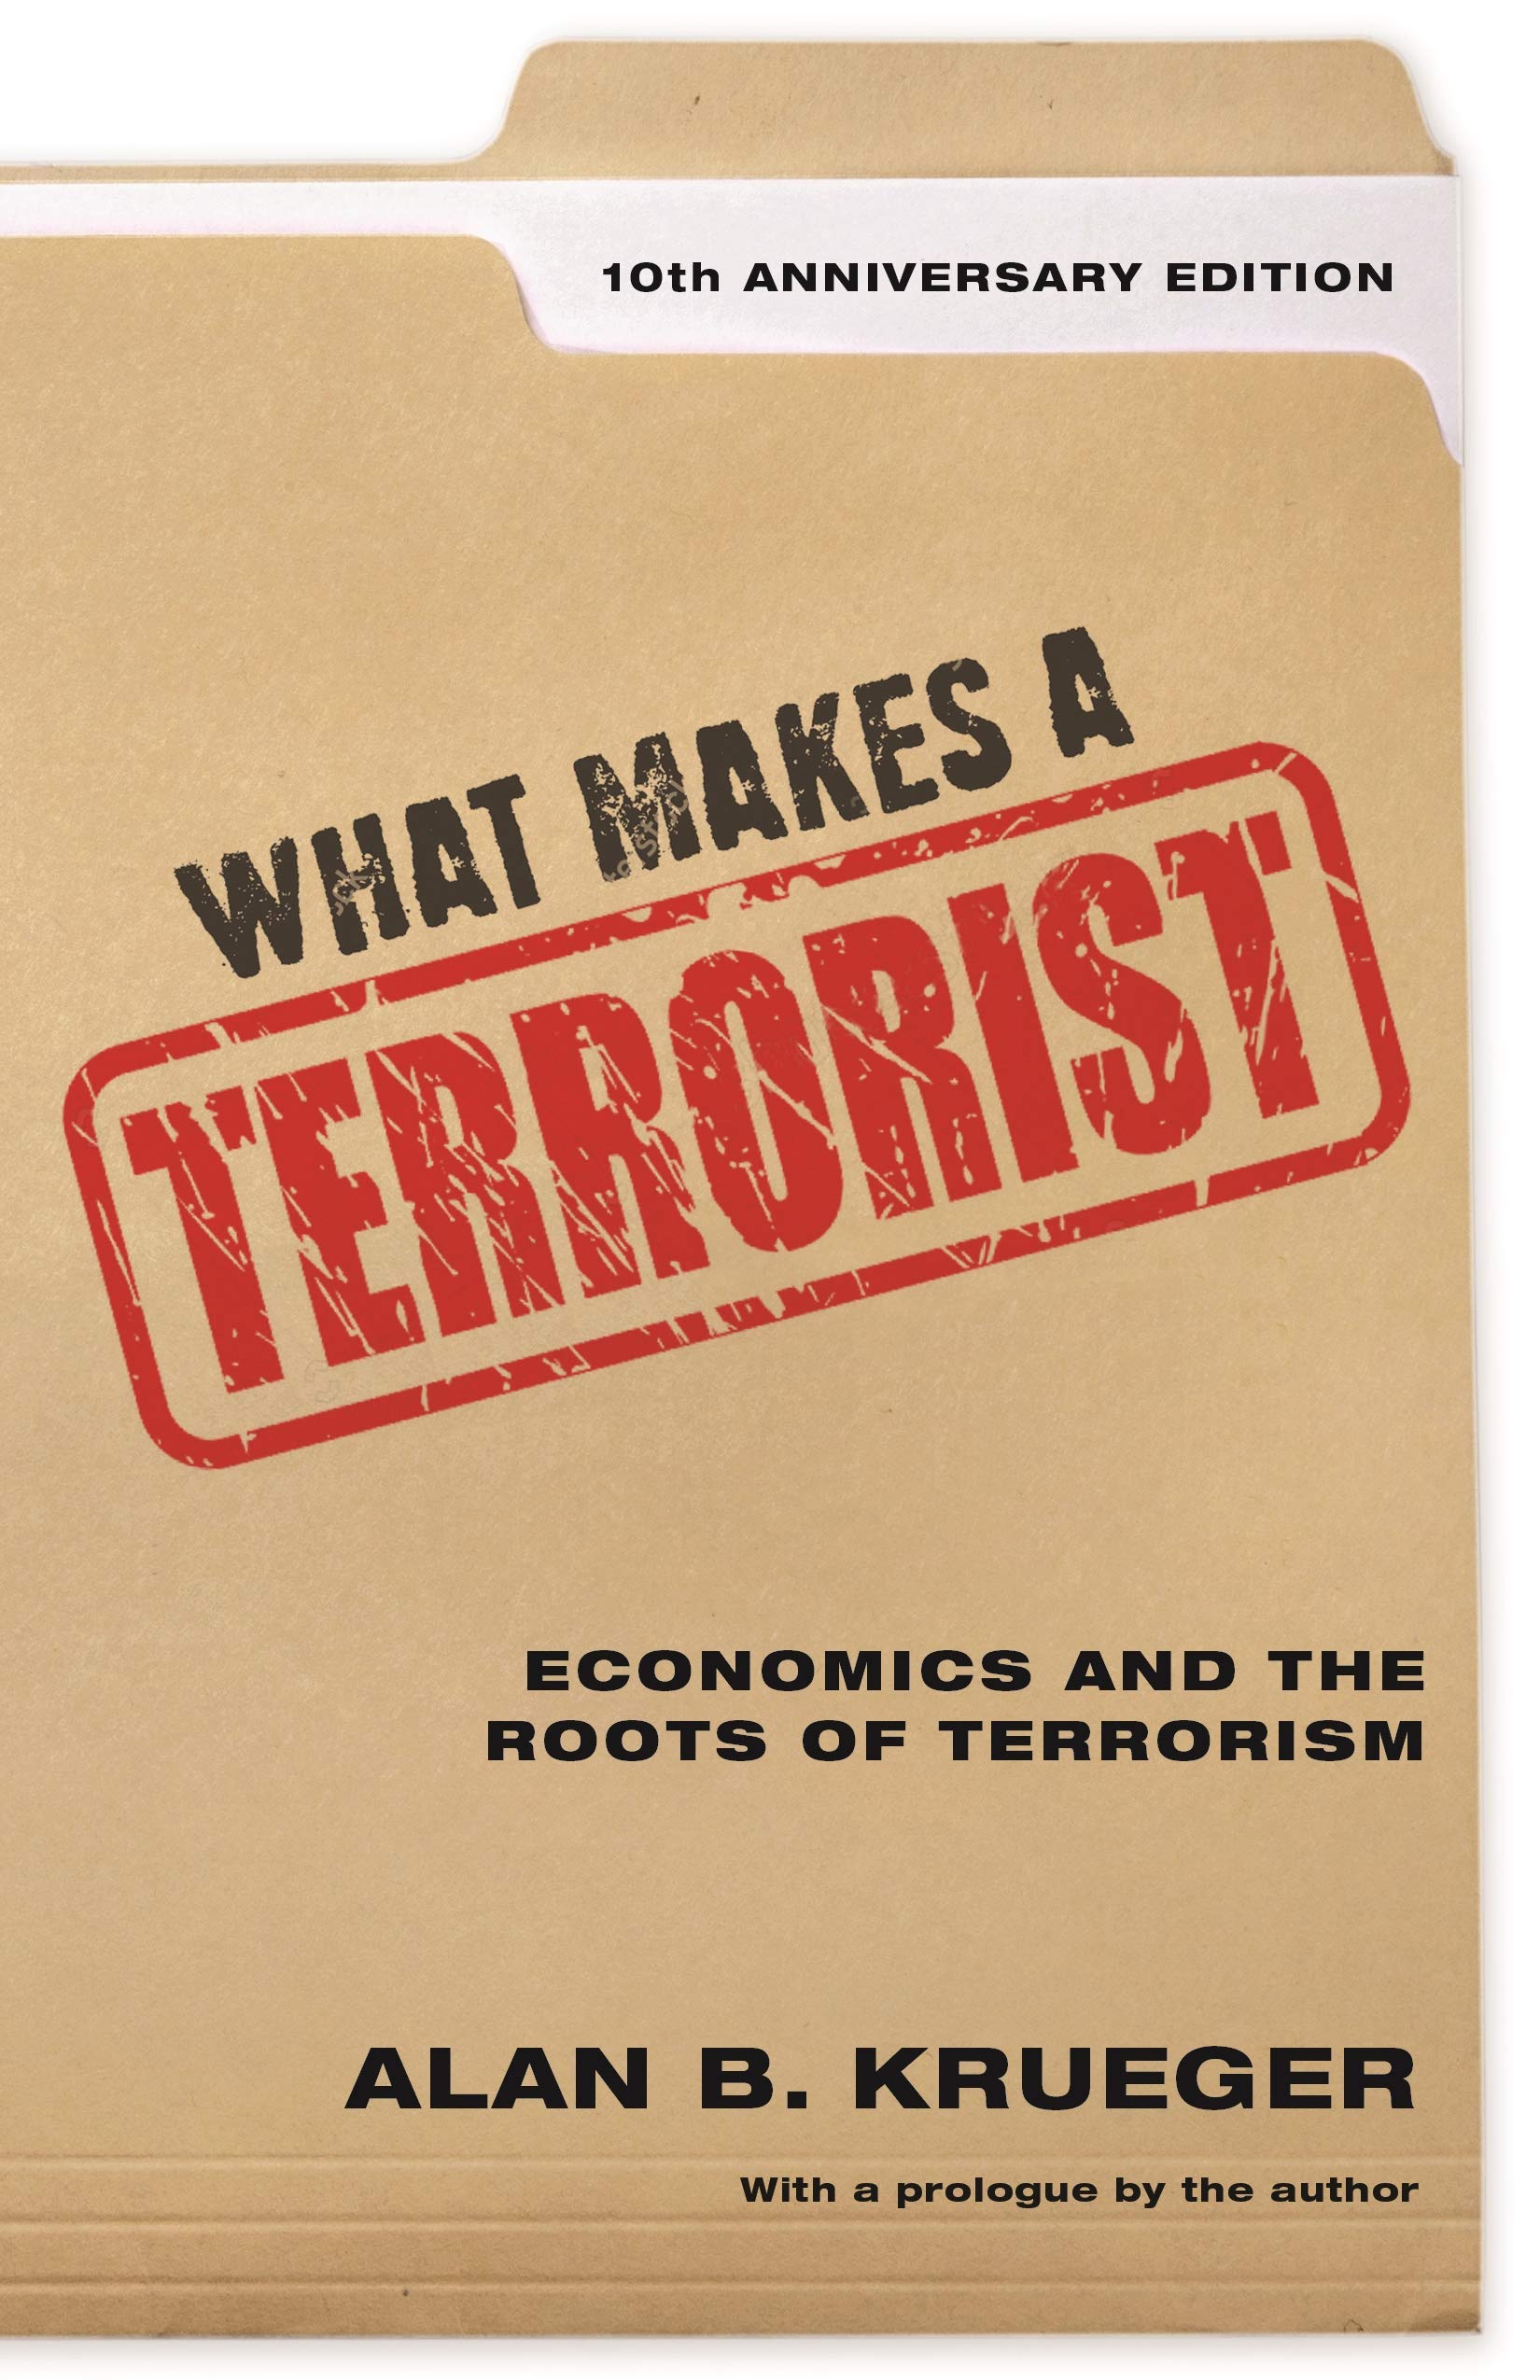 What makes a terrorist | Alan B. Krueger image4